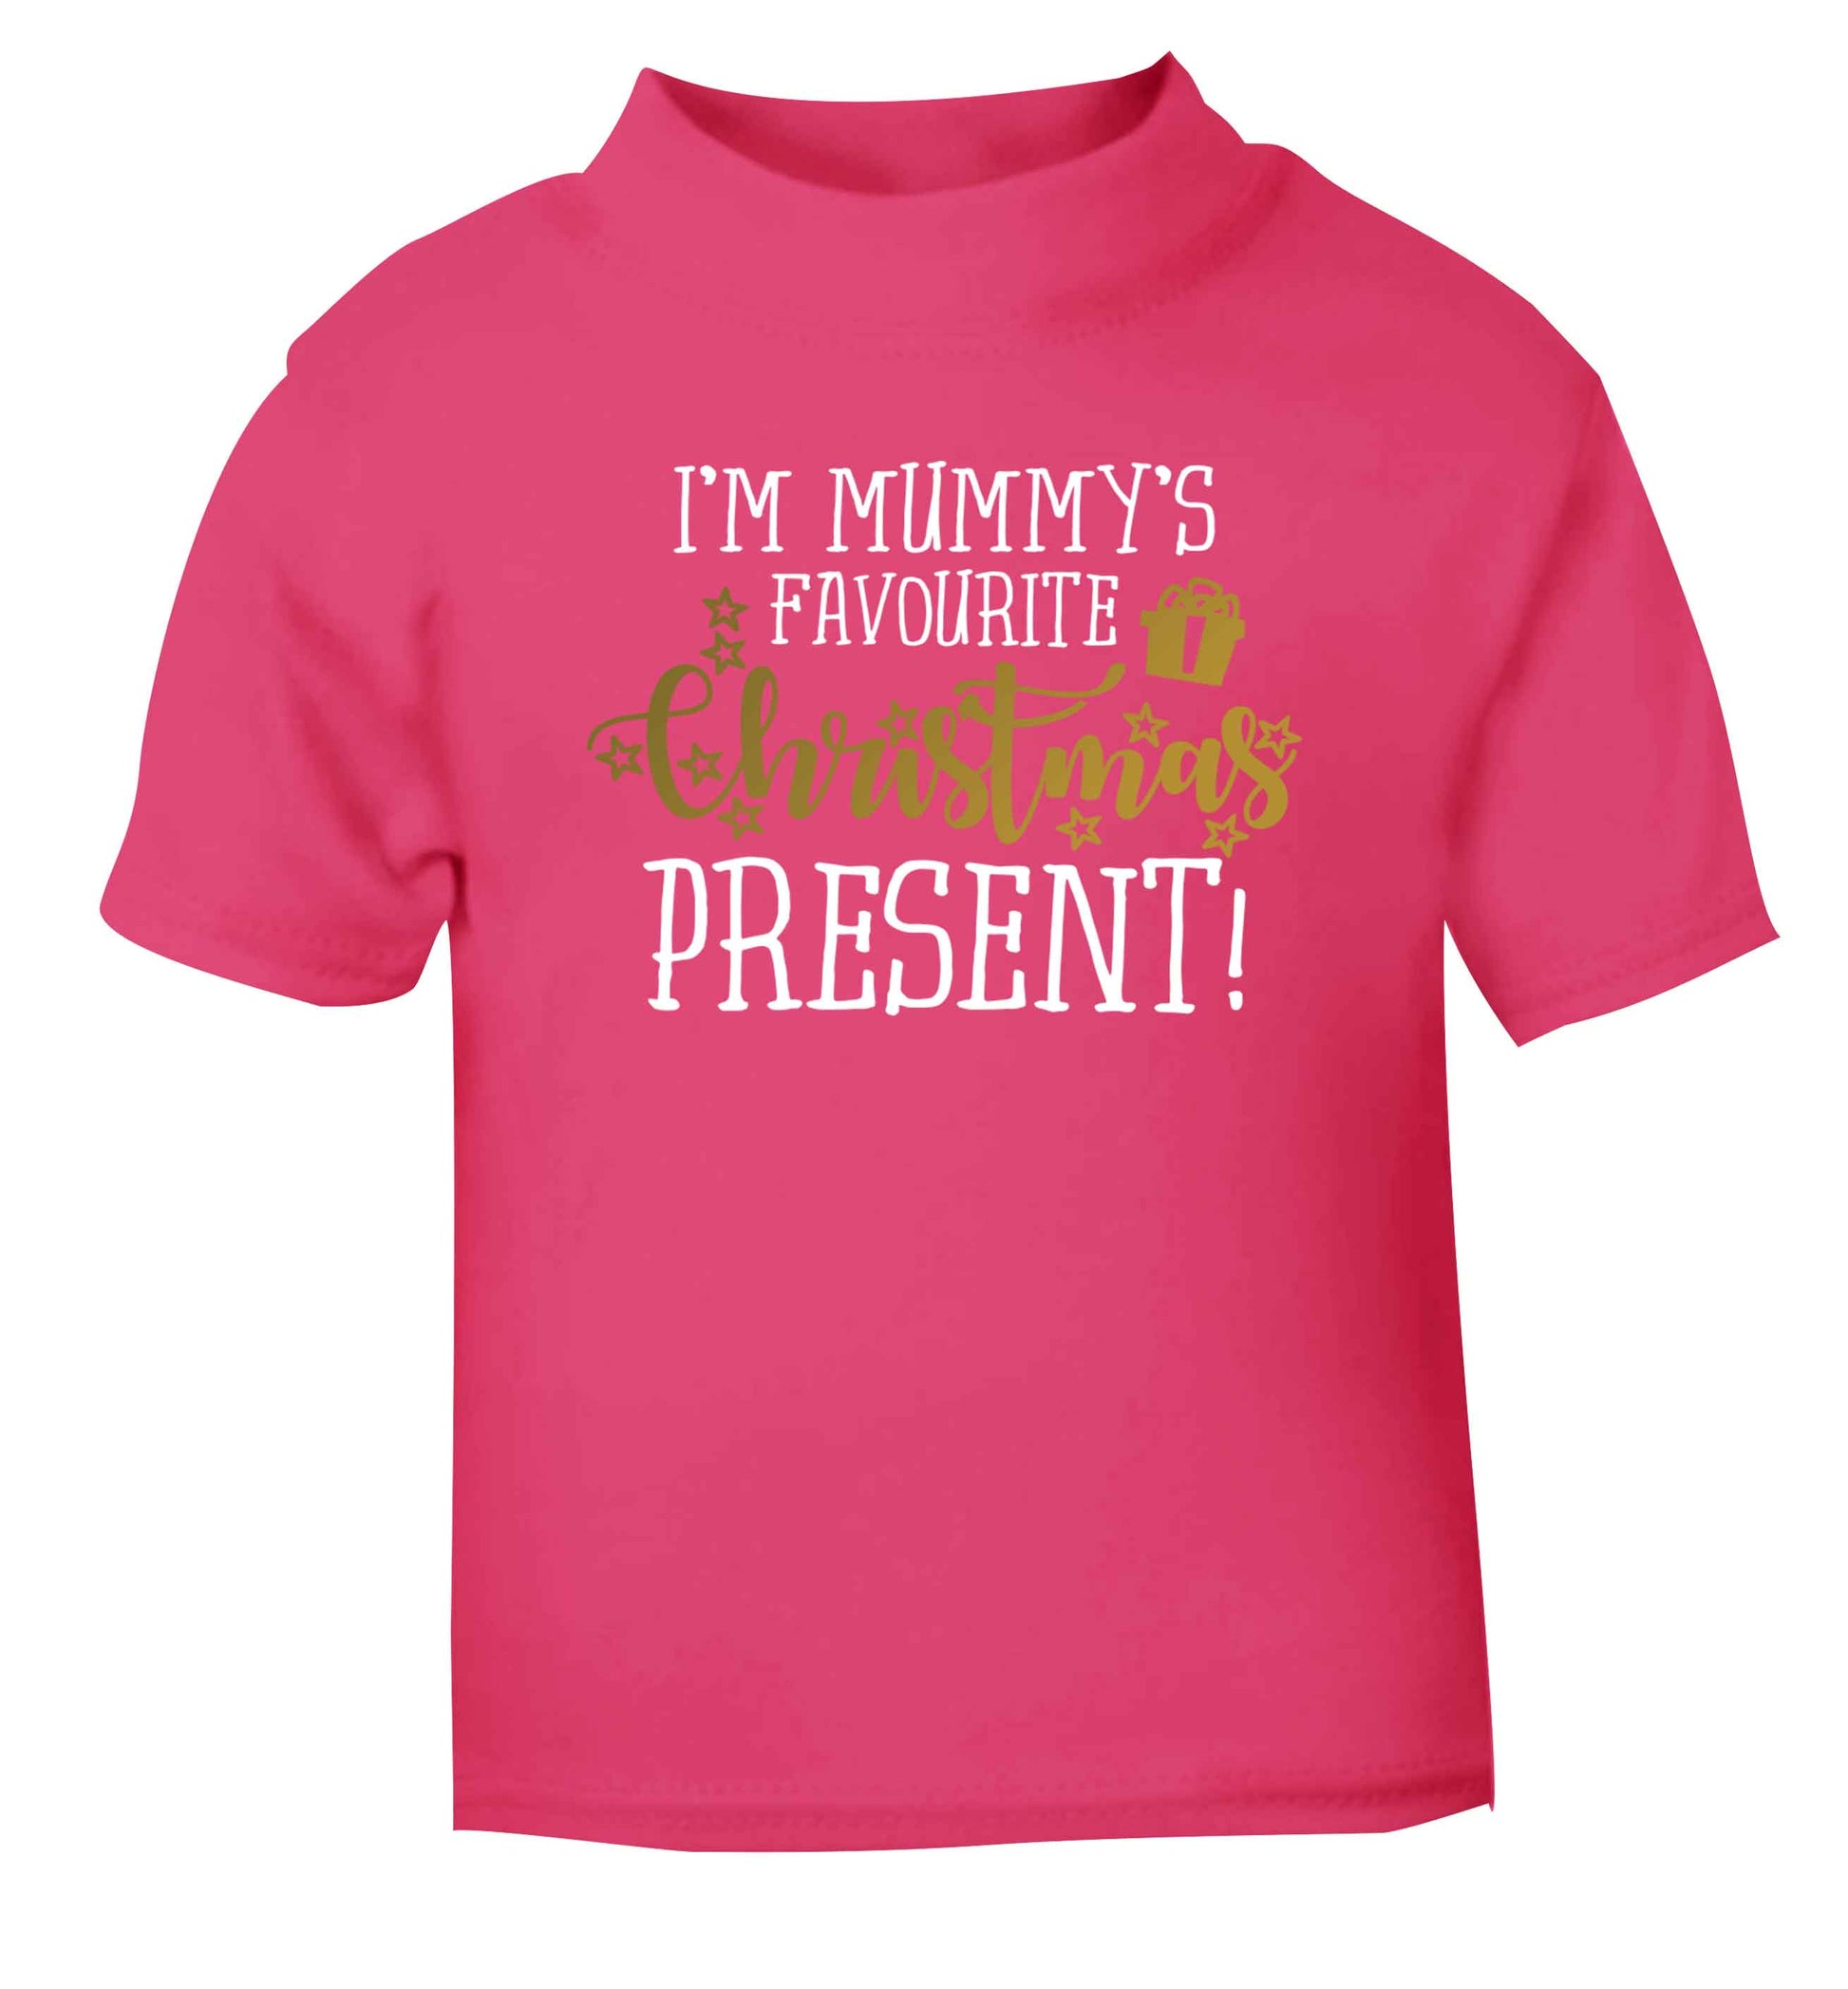 I'm Mummy's favourite Christmas present pink Baby Toddler Tshirt 2 Years